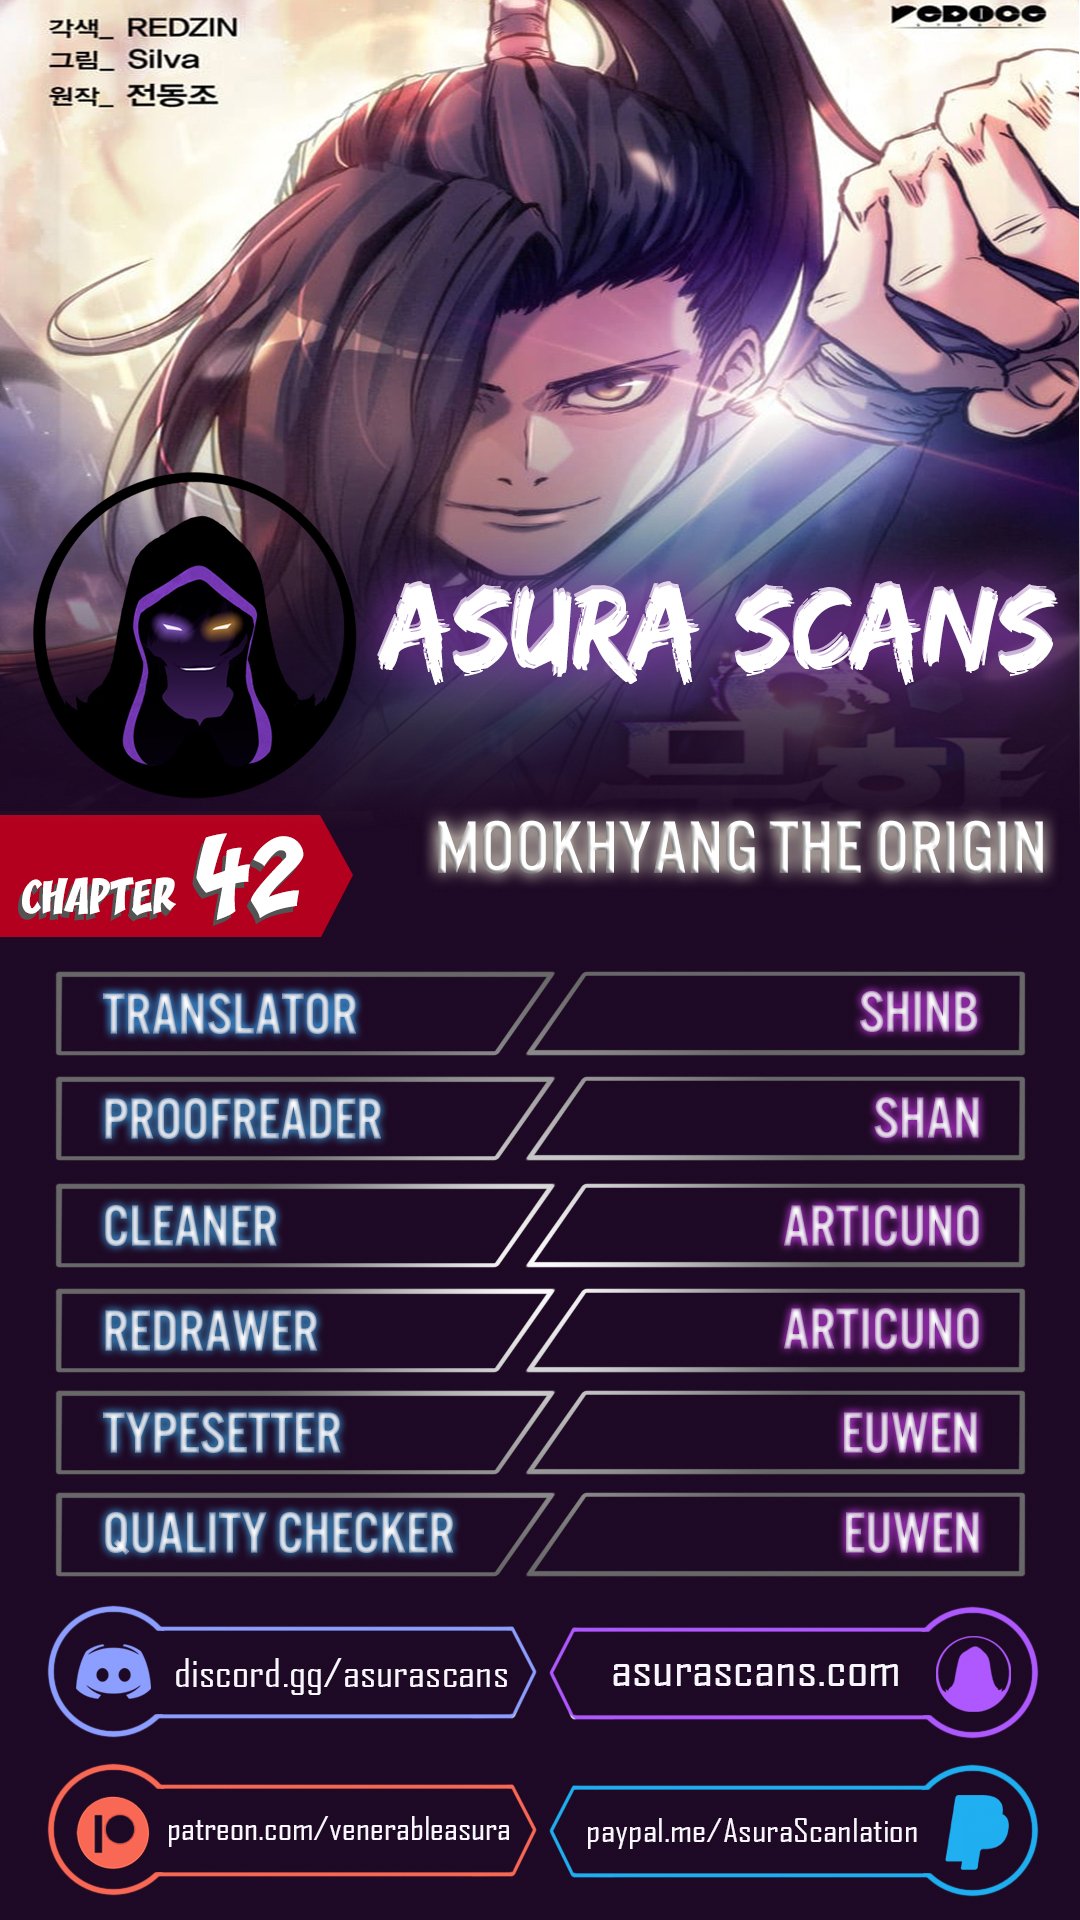 Mookhyang The Origin 42